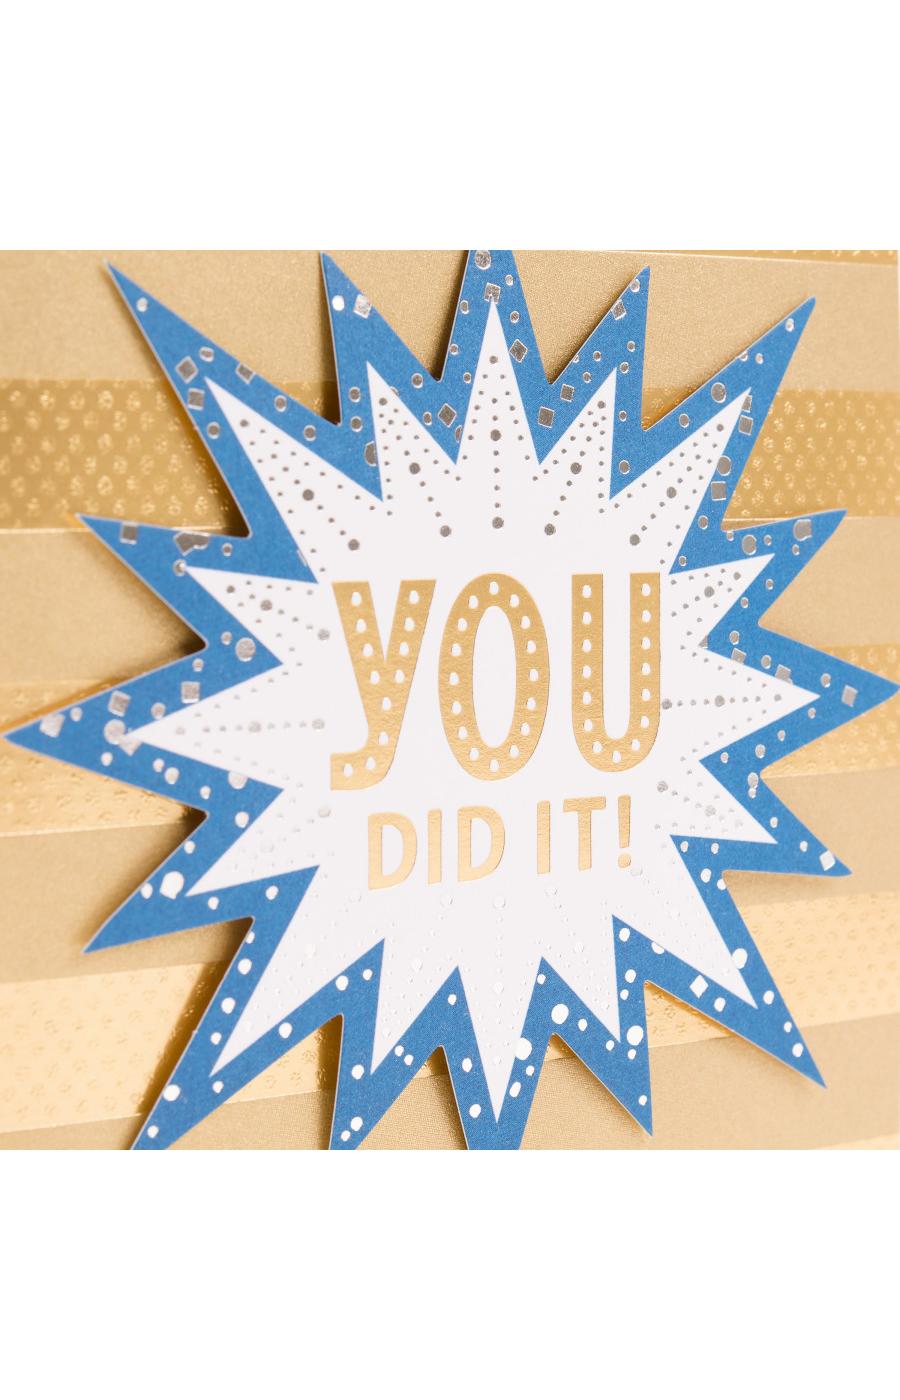 Hallmark You Did It! Congratulations Card or Graduation Card - E46; image 2 of 4